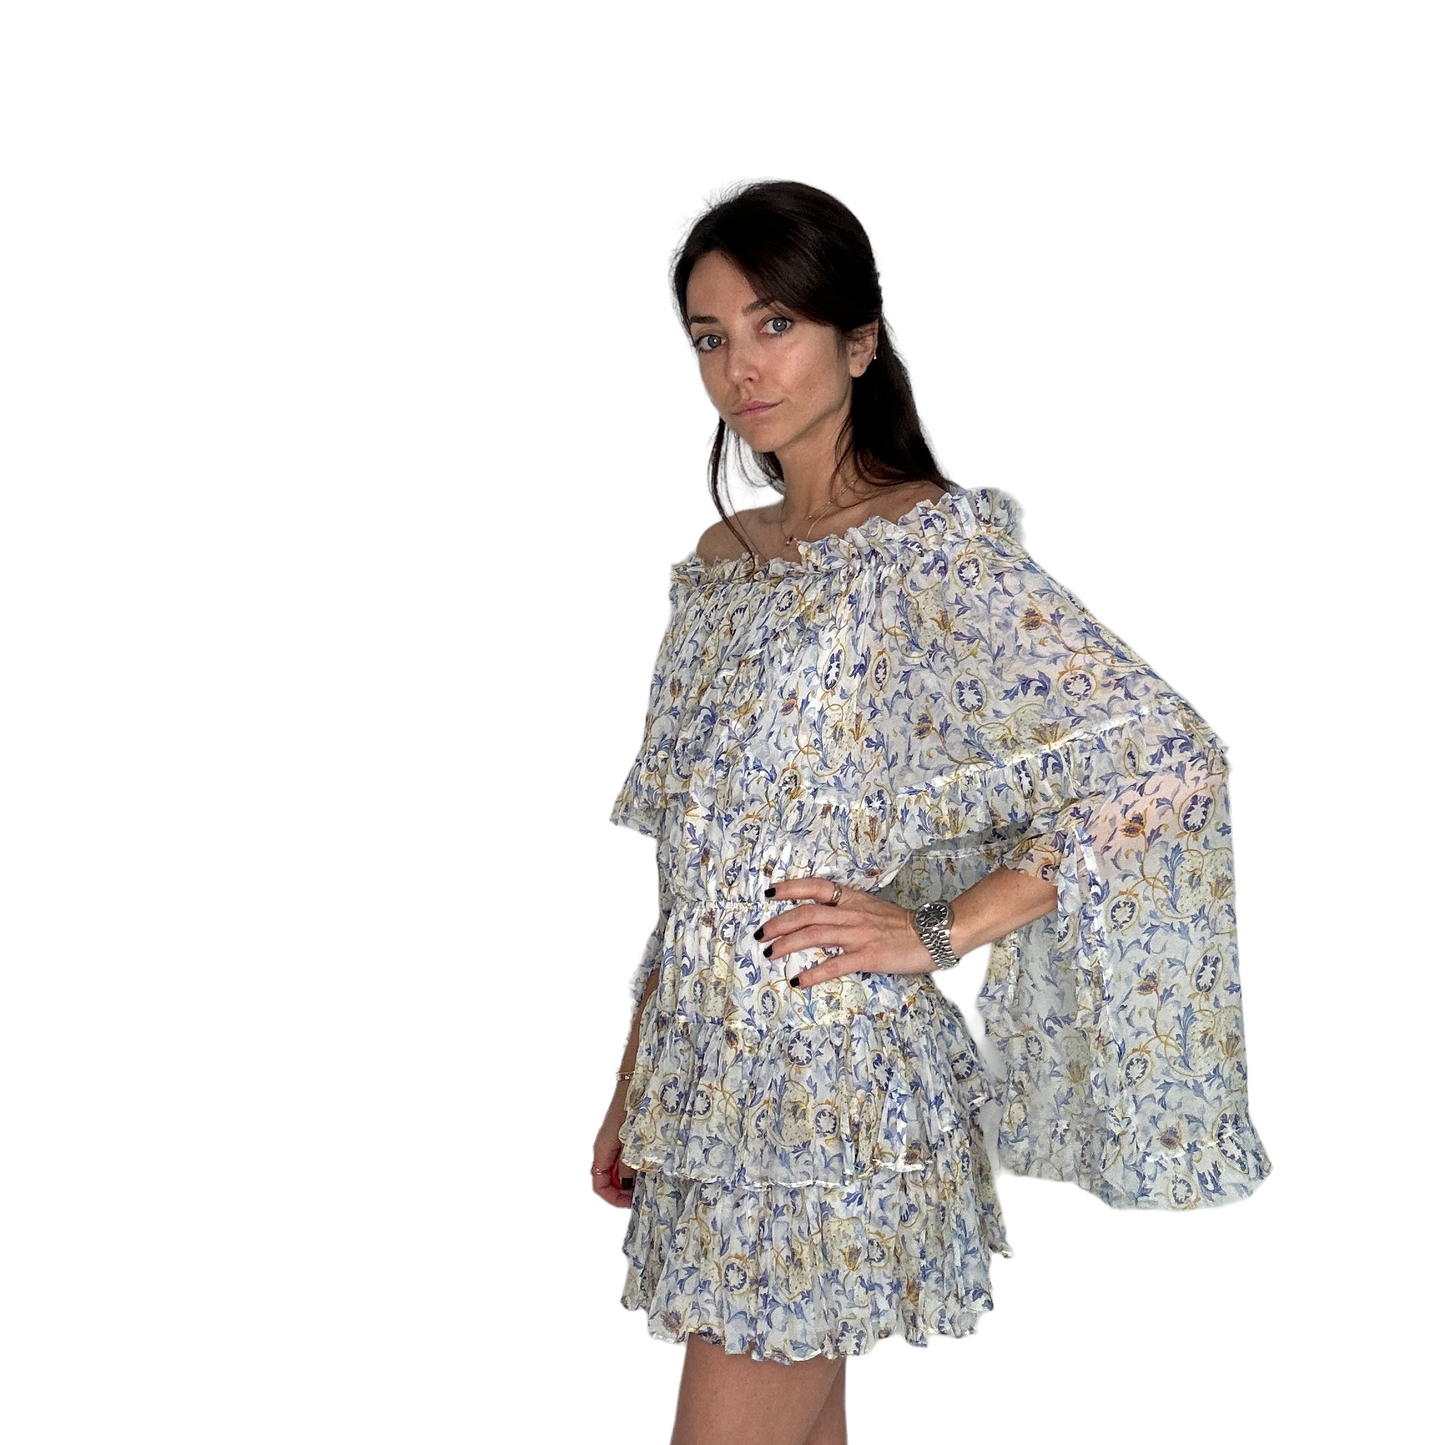 Blue Flower Print Dress - XS